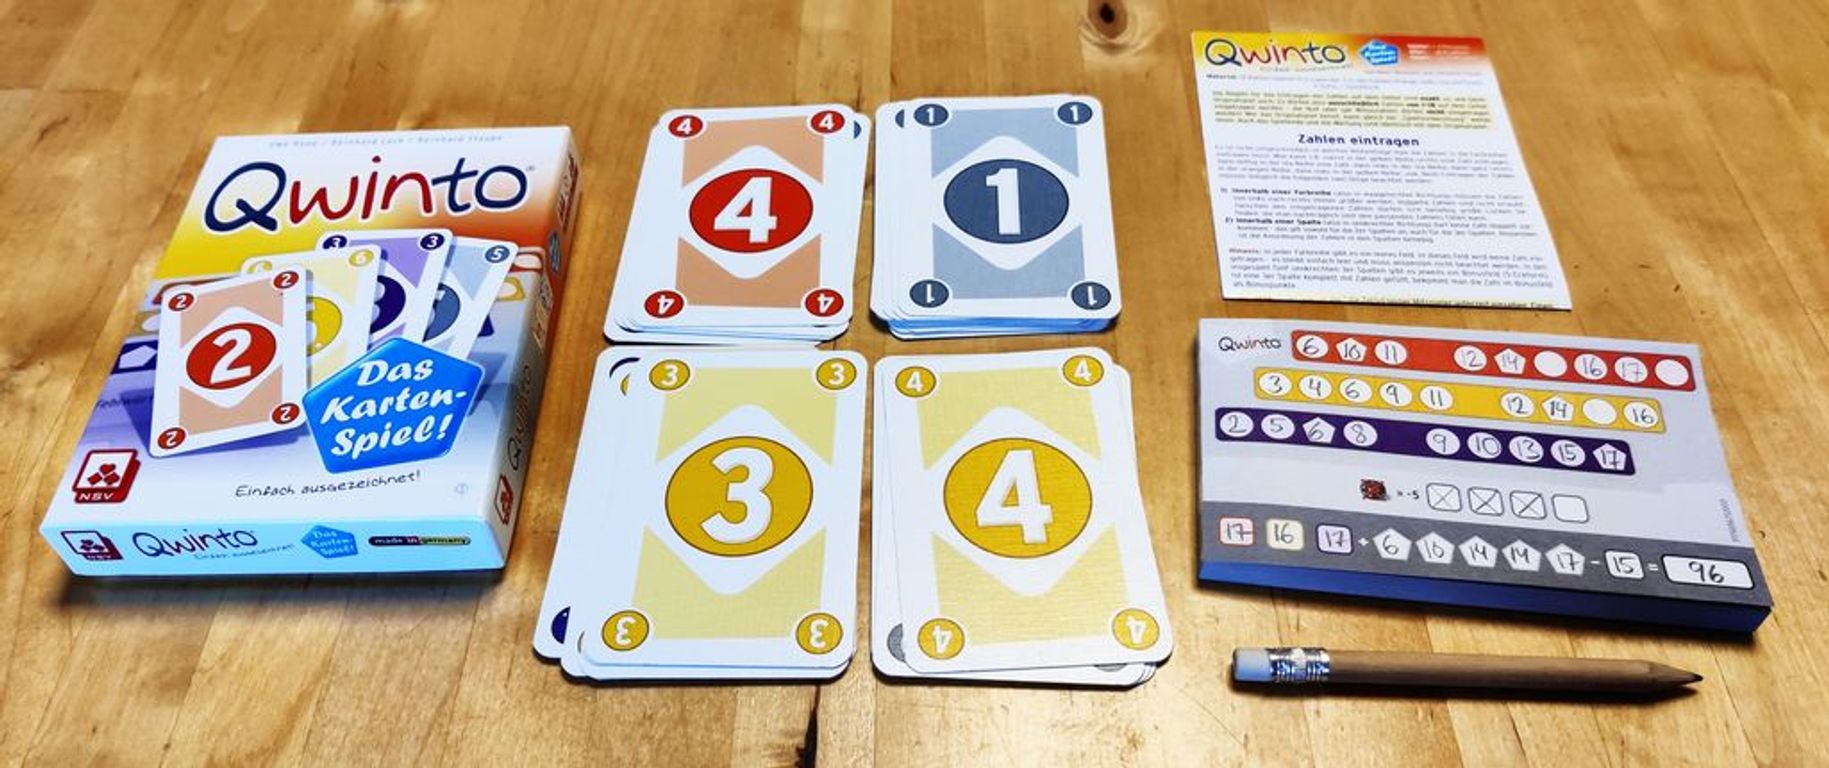 Qwinto: Das Kartenspiel components